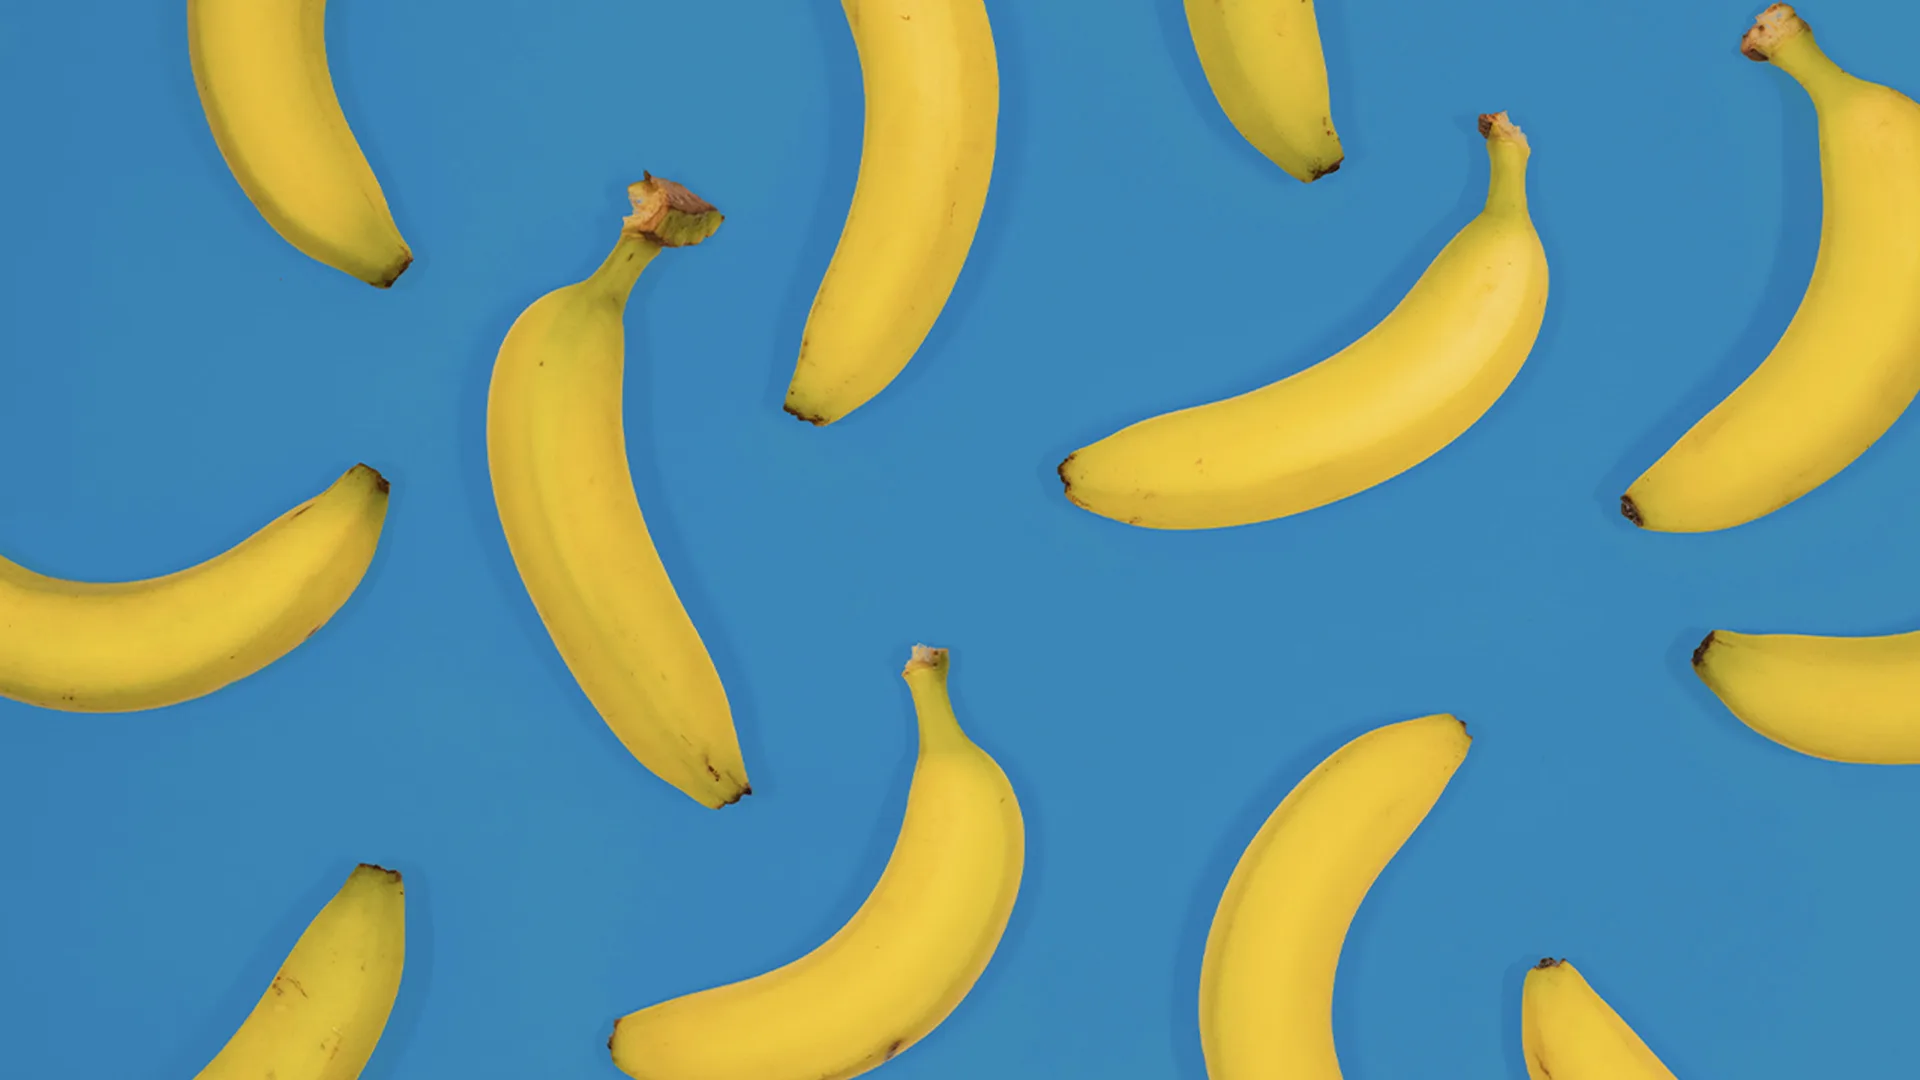 Banana design on blue background